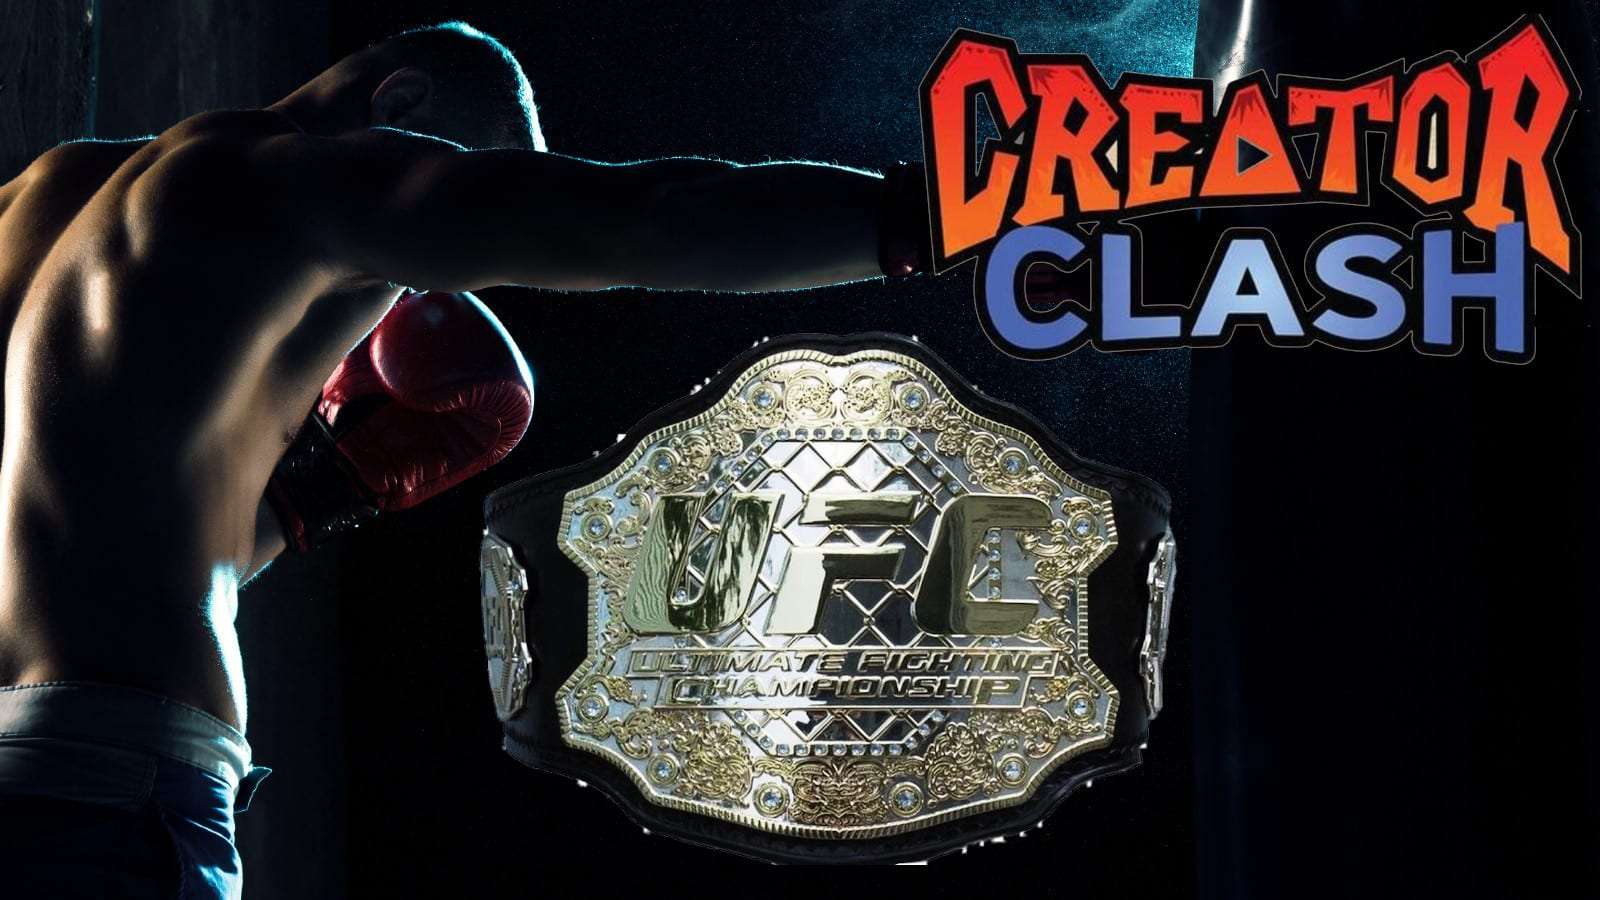 UFC champ fighting in creator clash